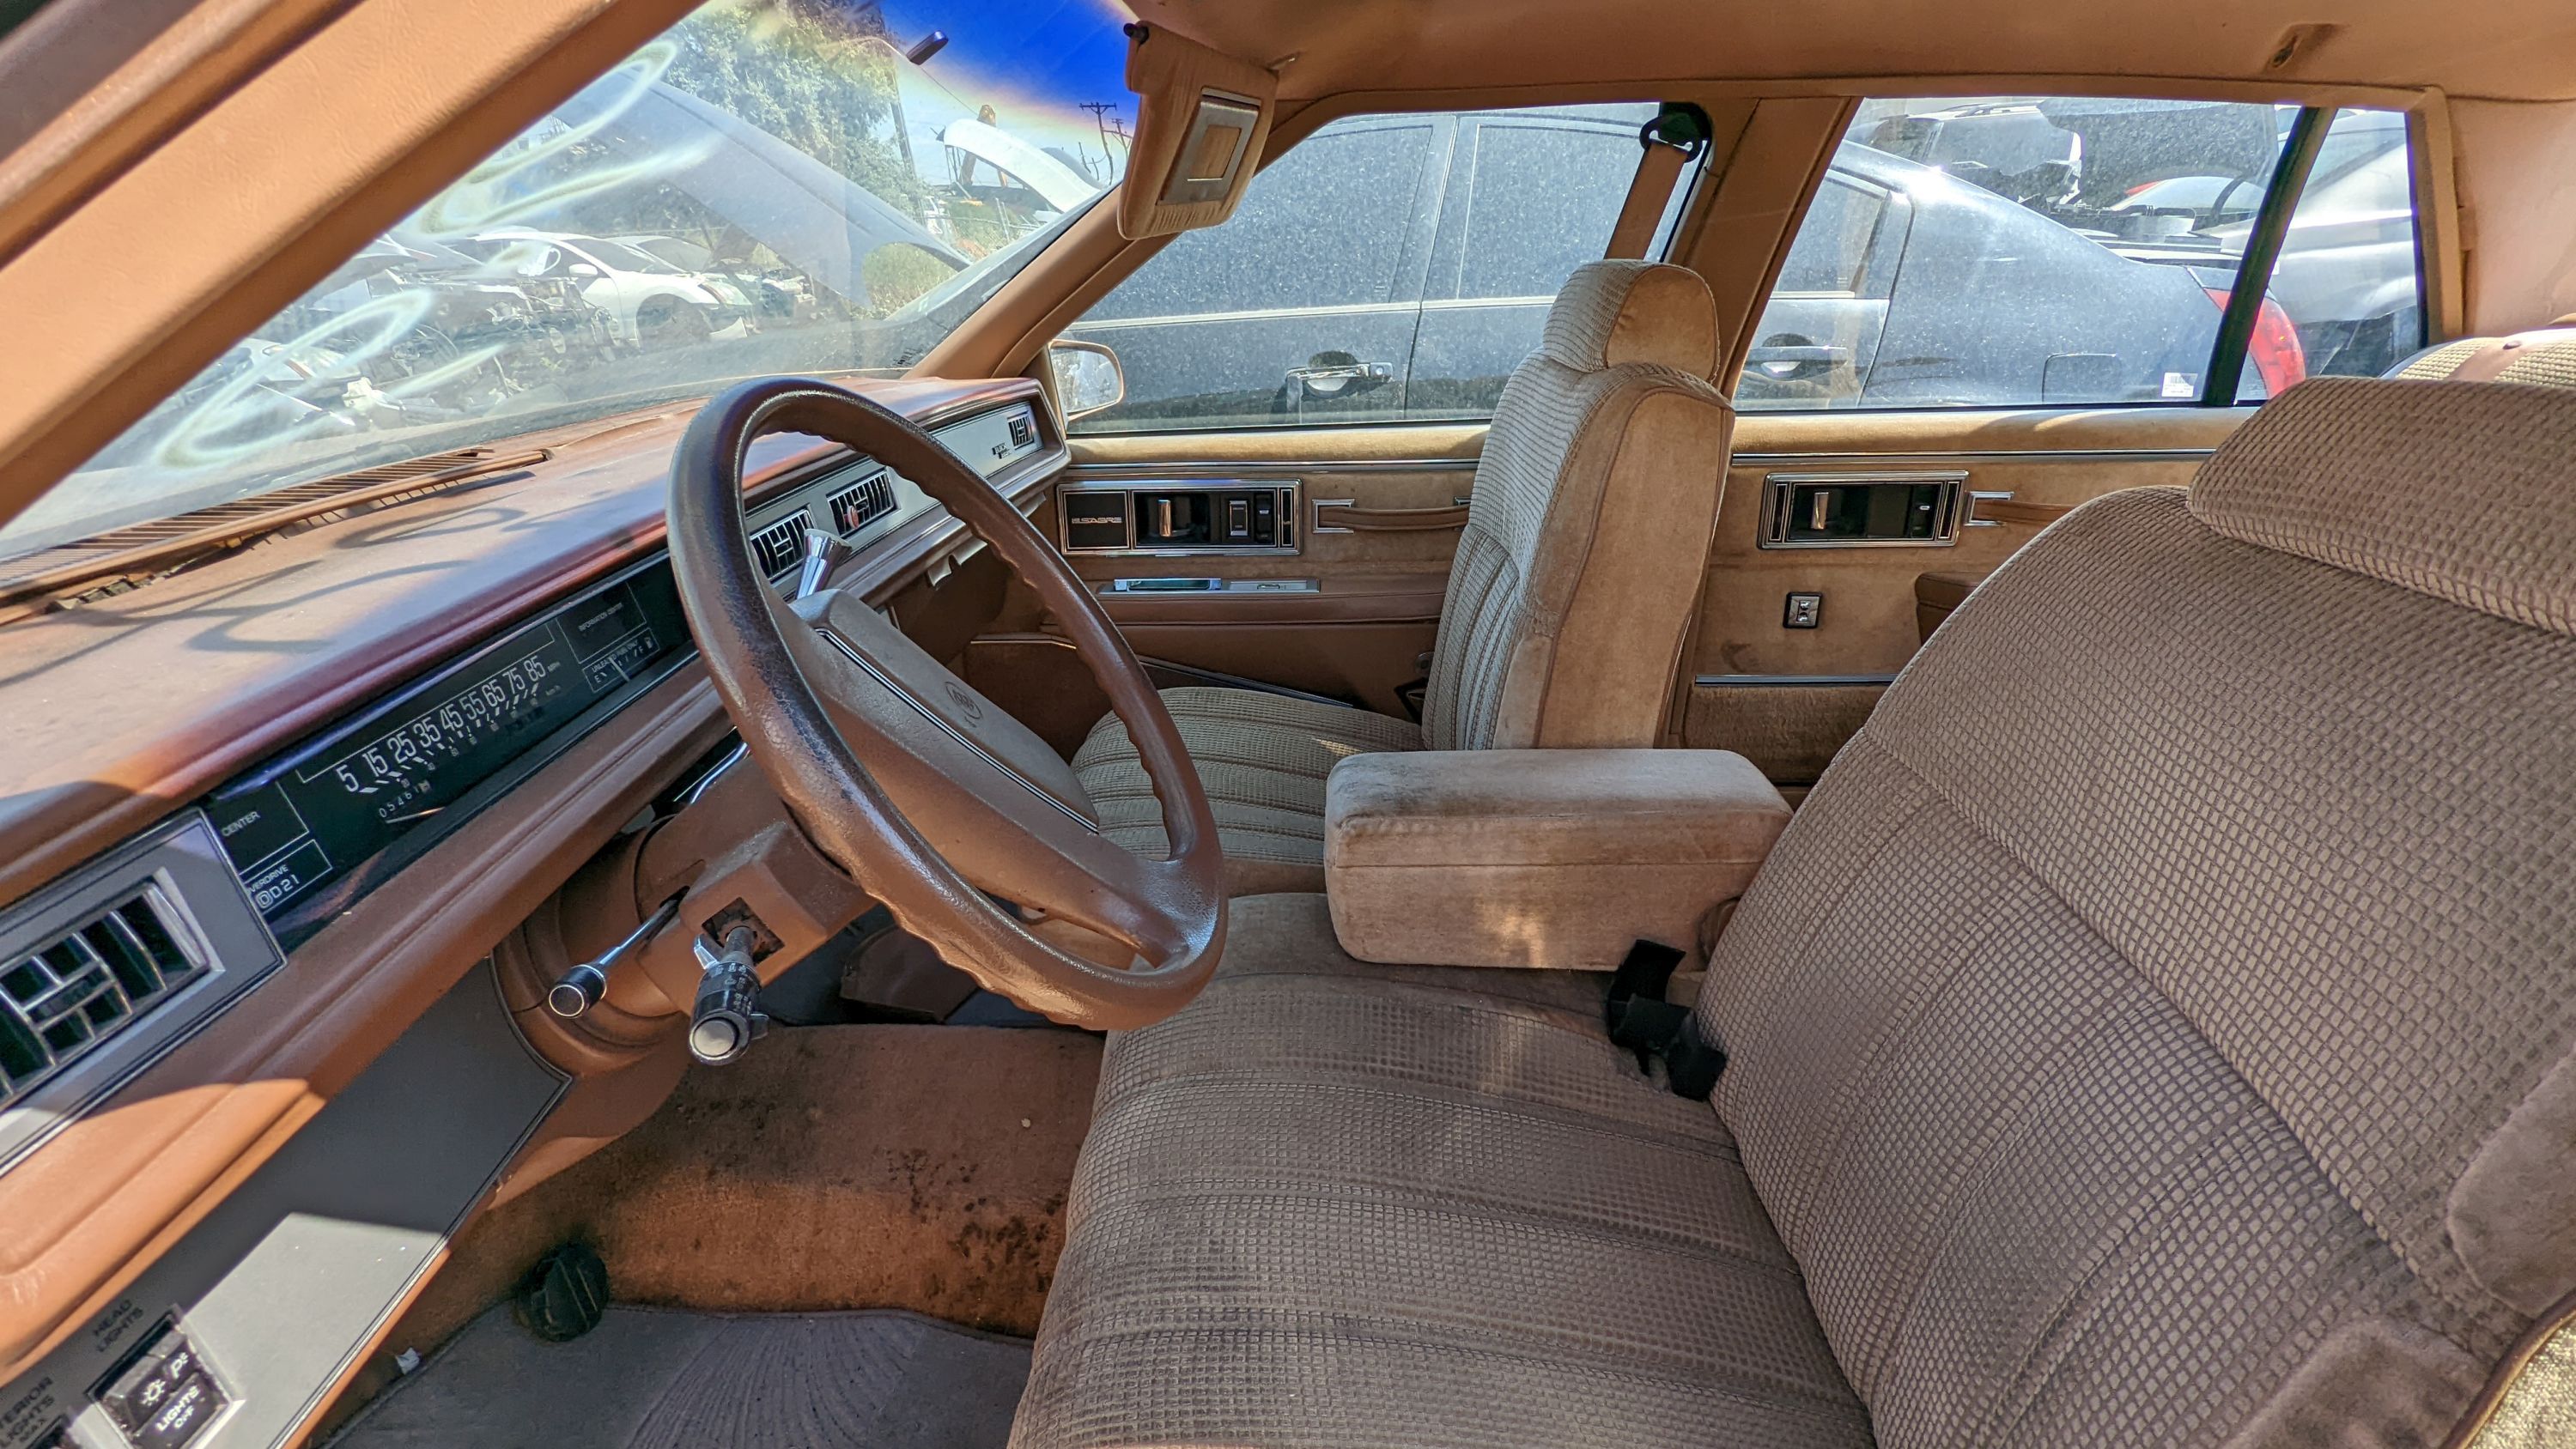 11 - 1988 Buick LeSabre in Colorado junkyard - Photo by Murilee Martin